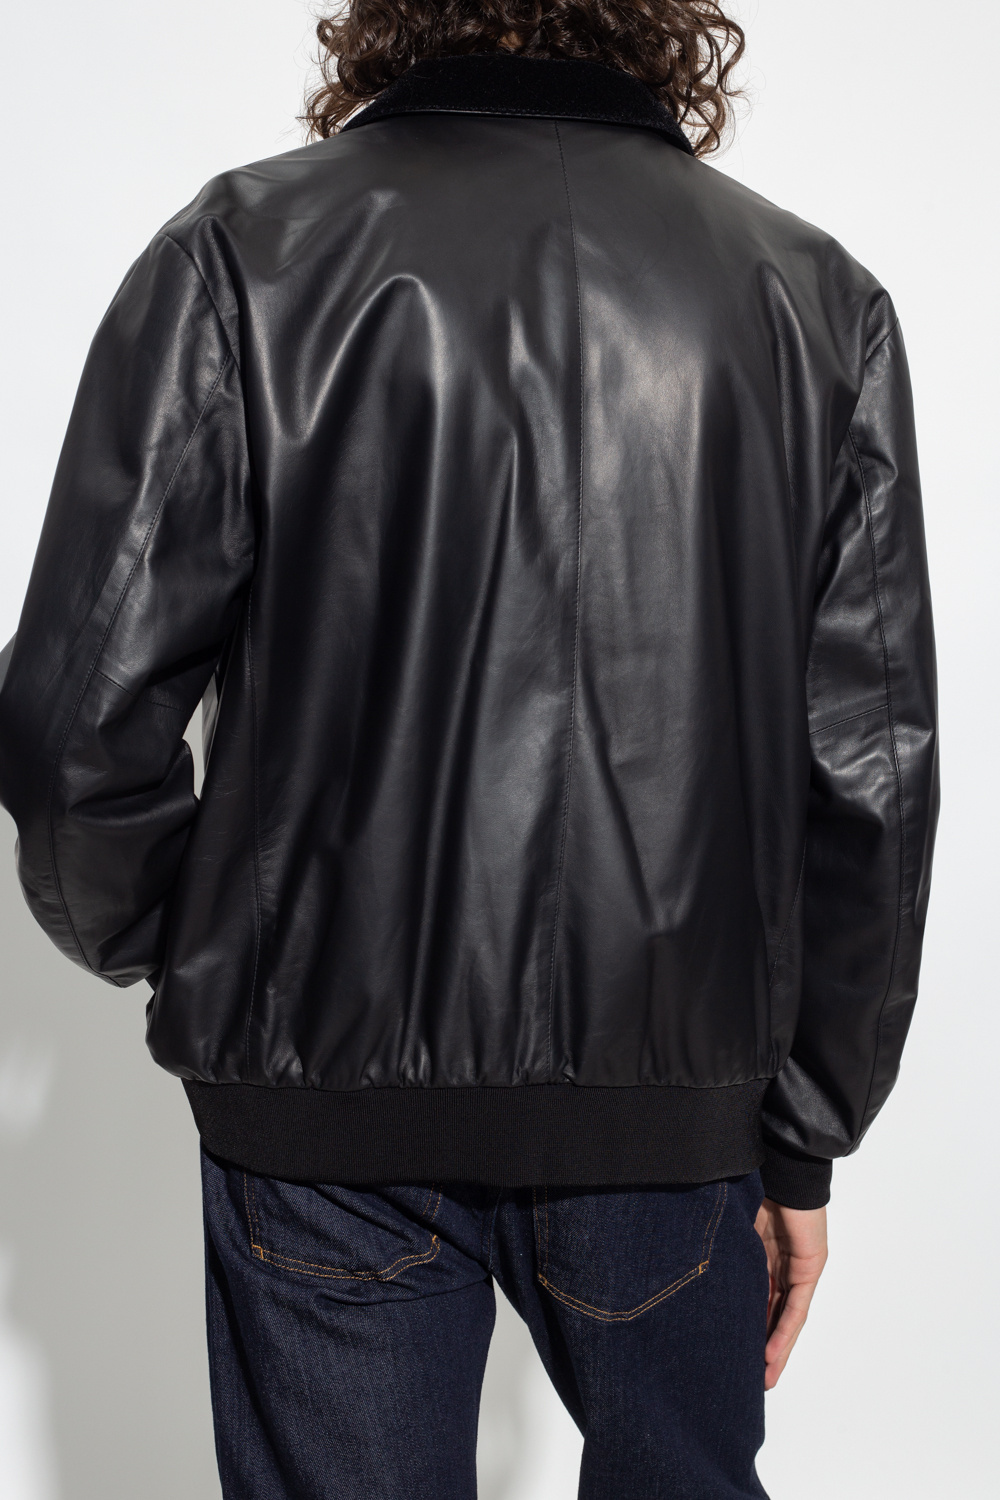 Giorgio Armani AR1737 jacket